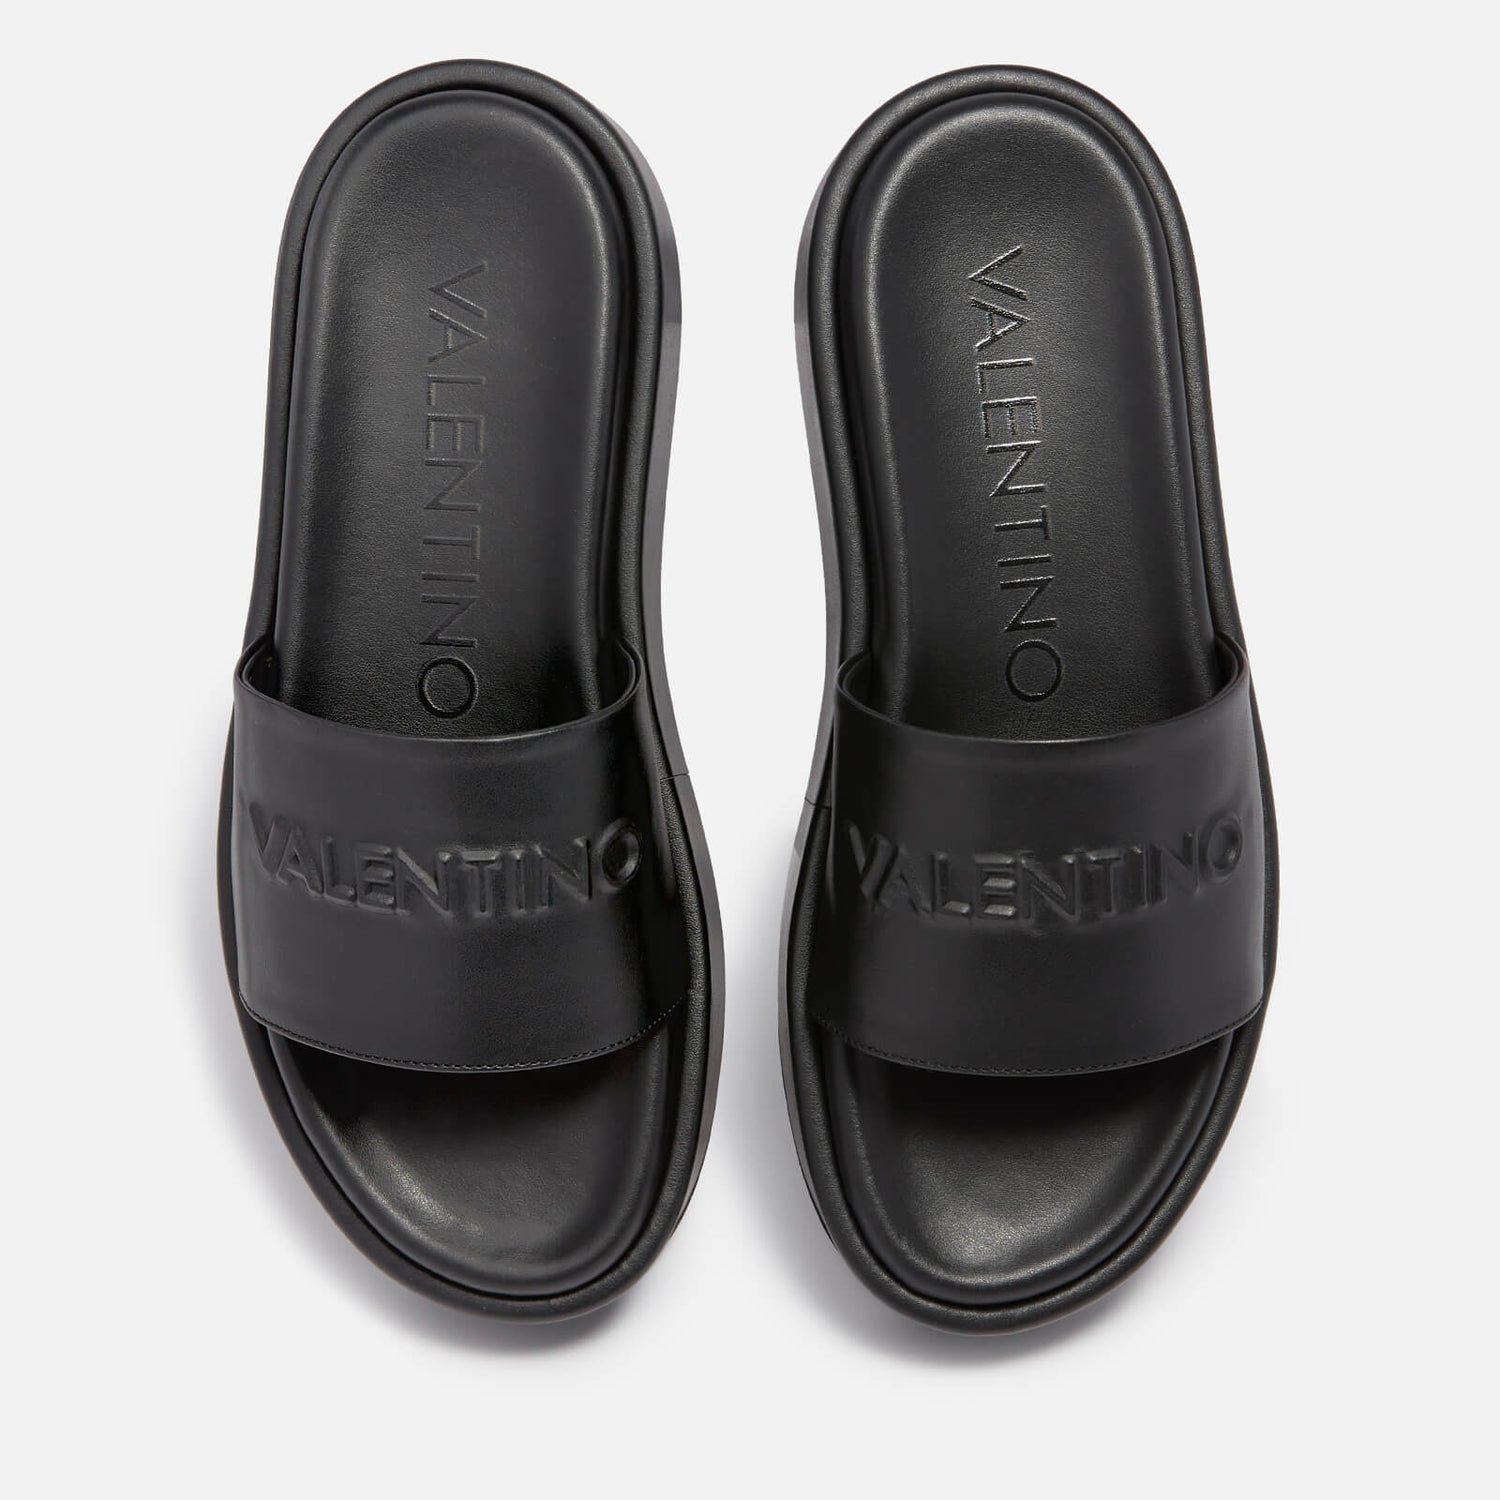 Valentino Women's Leather Flatform Sandals - Black - UK 3